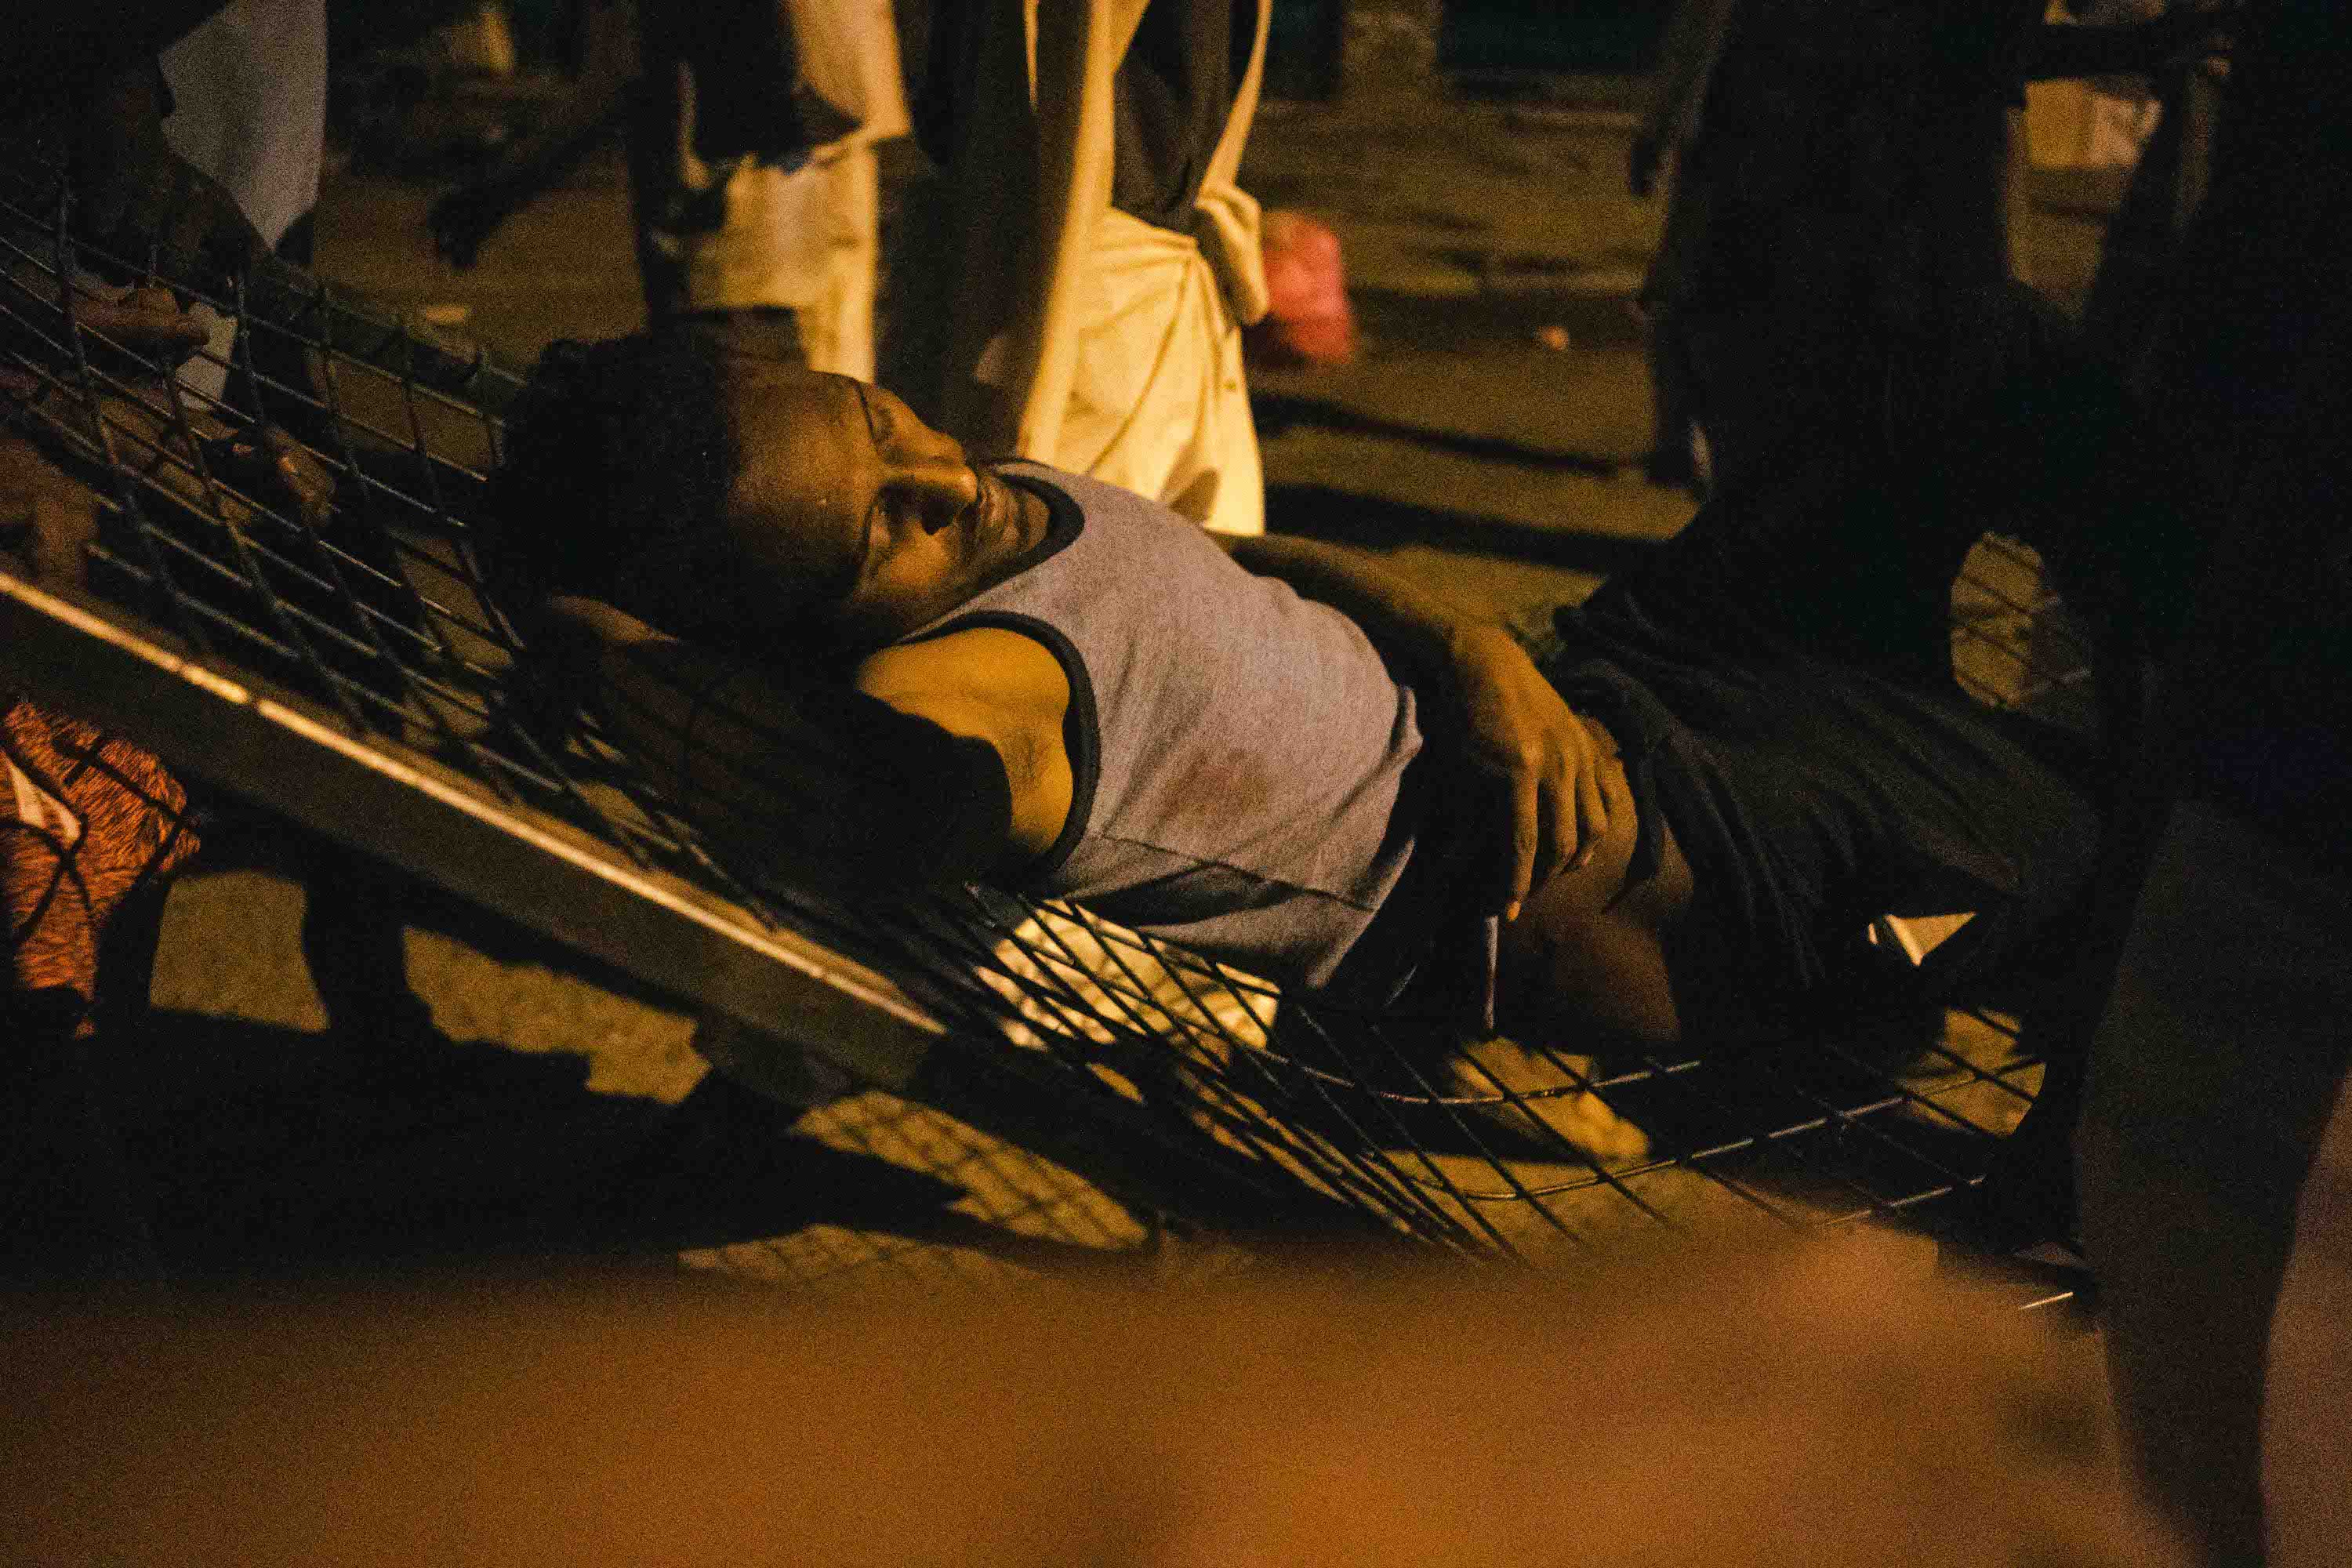 sudan injured protesters